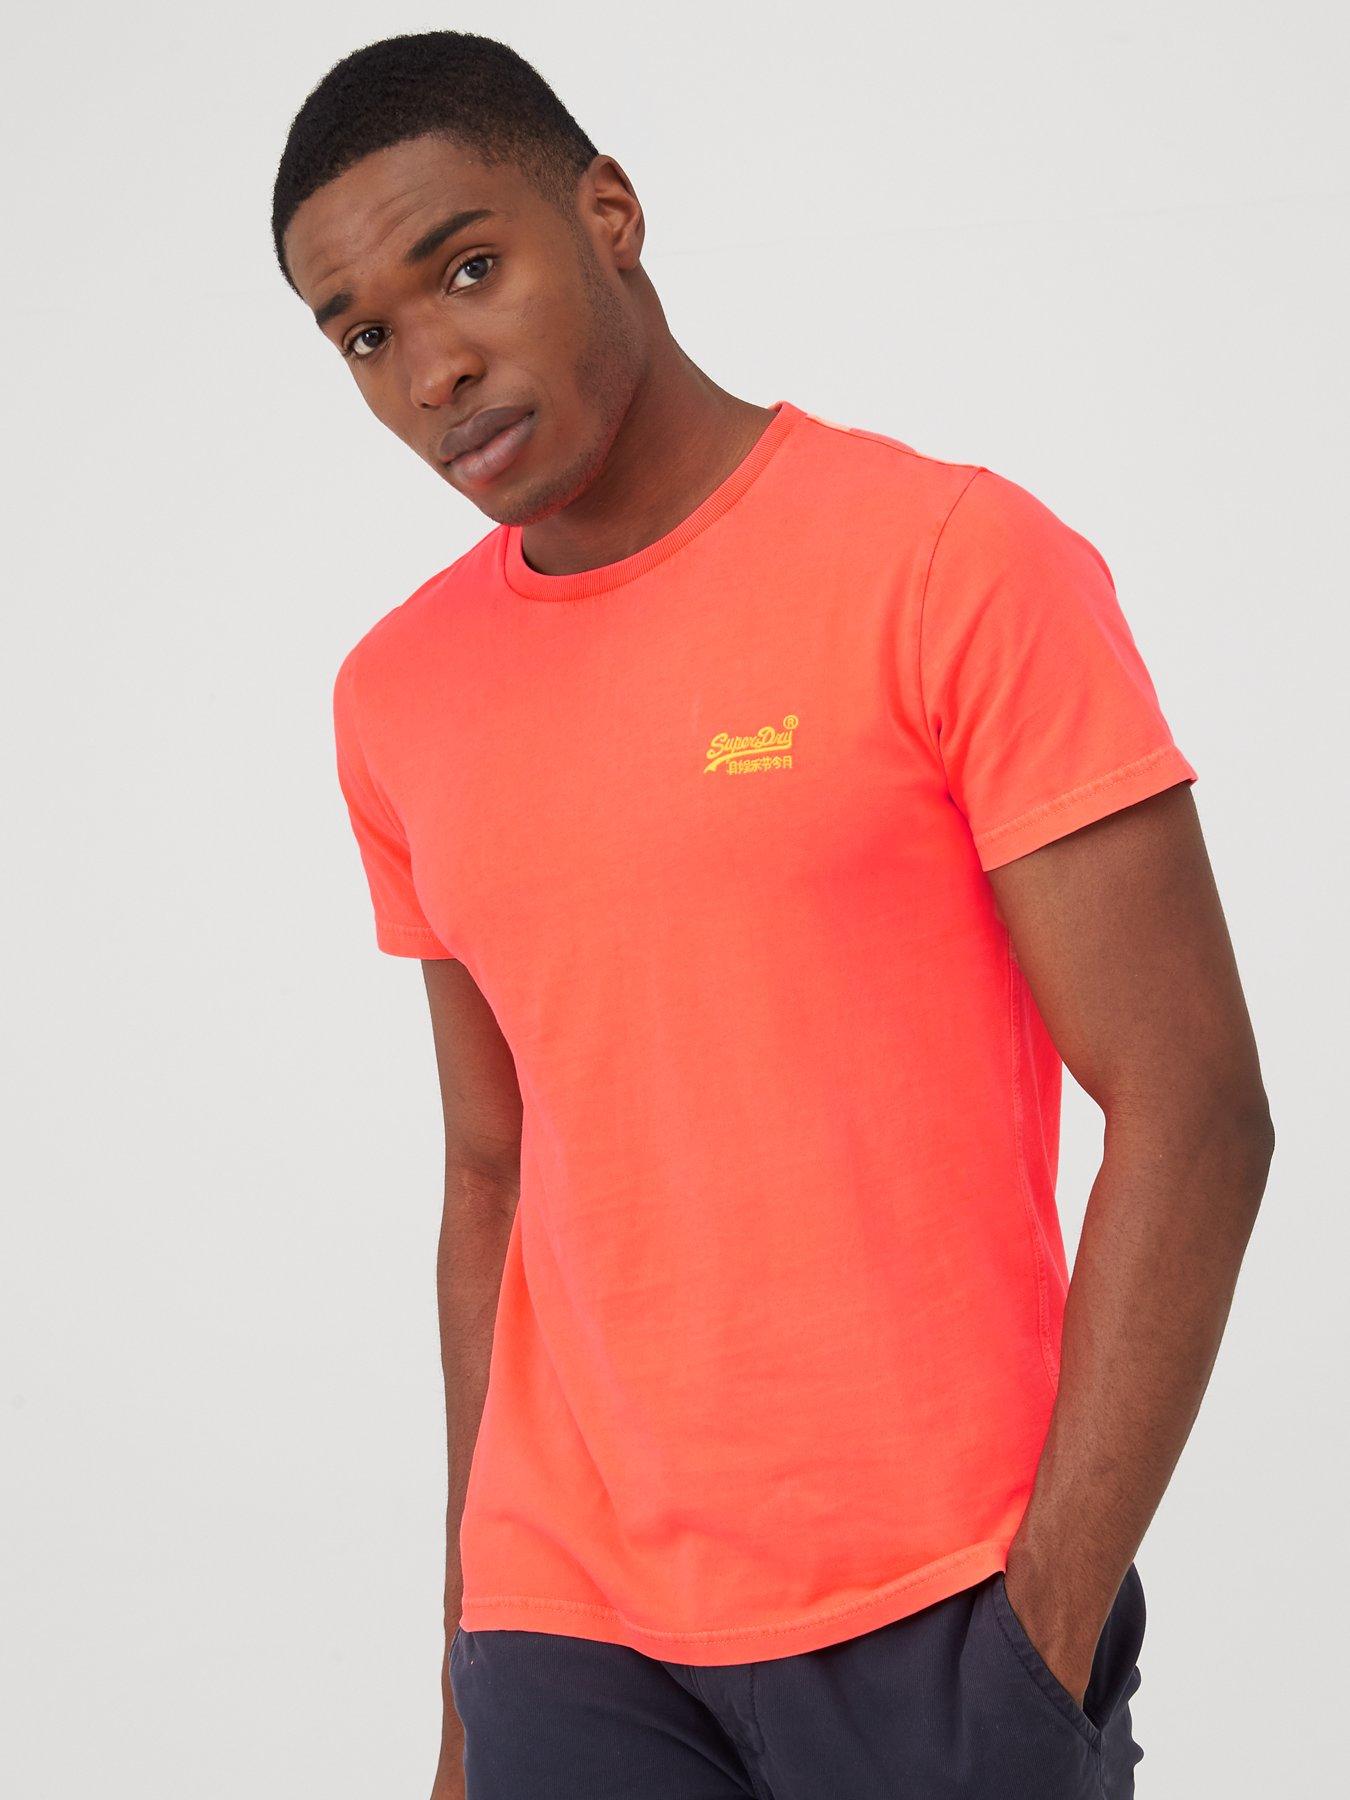 Superdry Mens Neon Lite Crew Neck Short Sleeve T Shirt Orange Blue Black Yellow